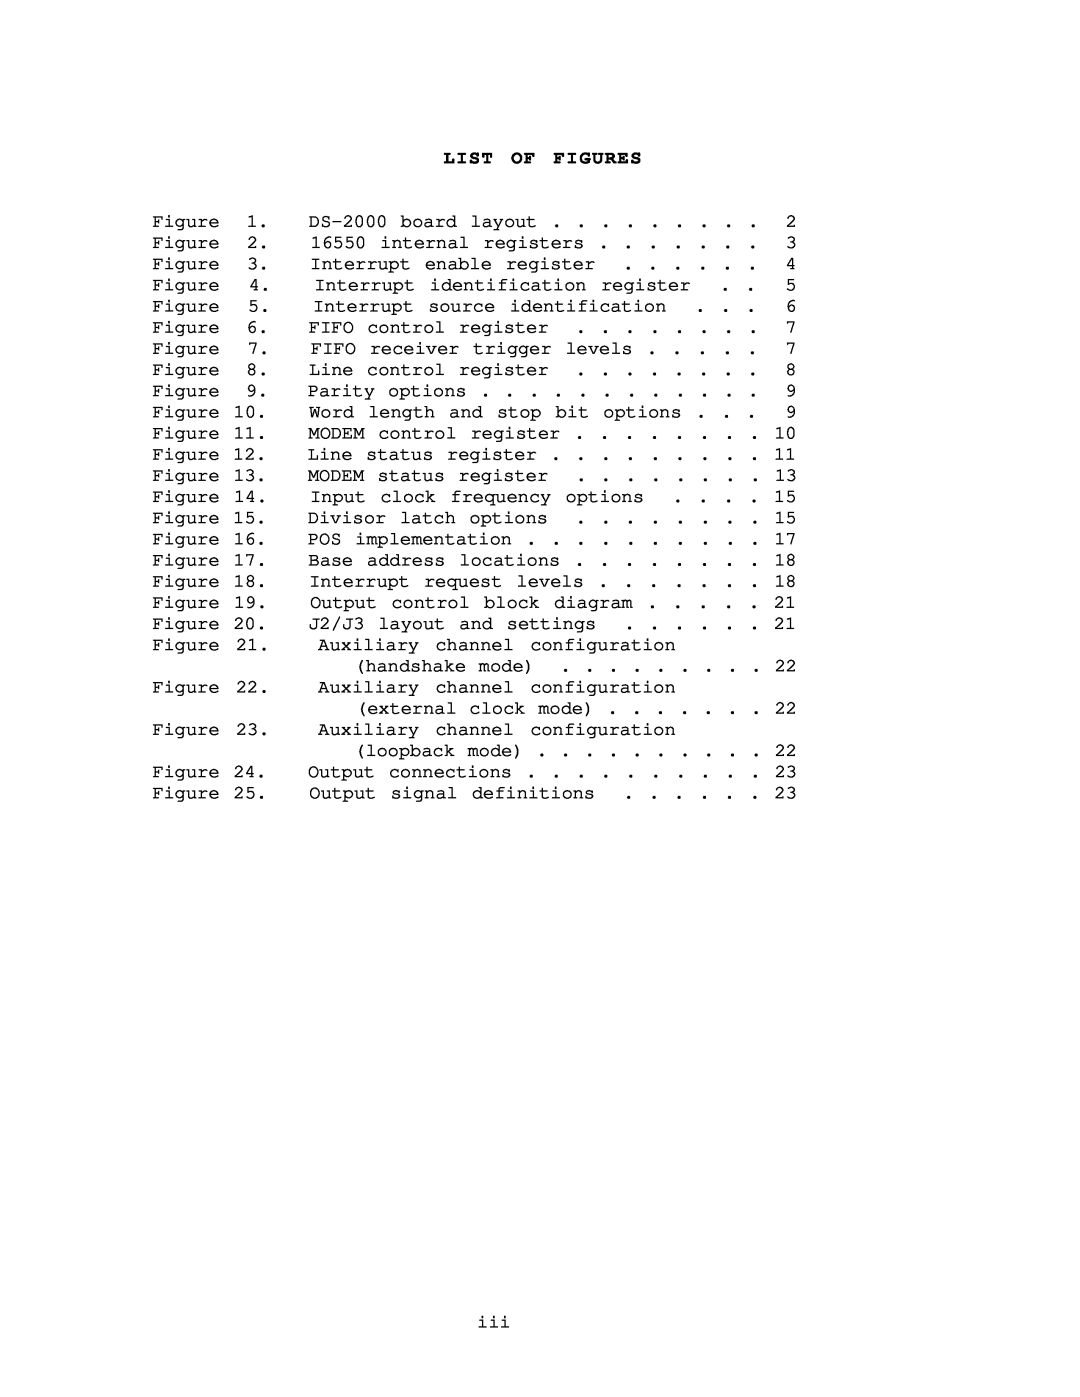 IBM DS-2000 warranty List, Figures 